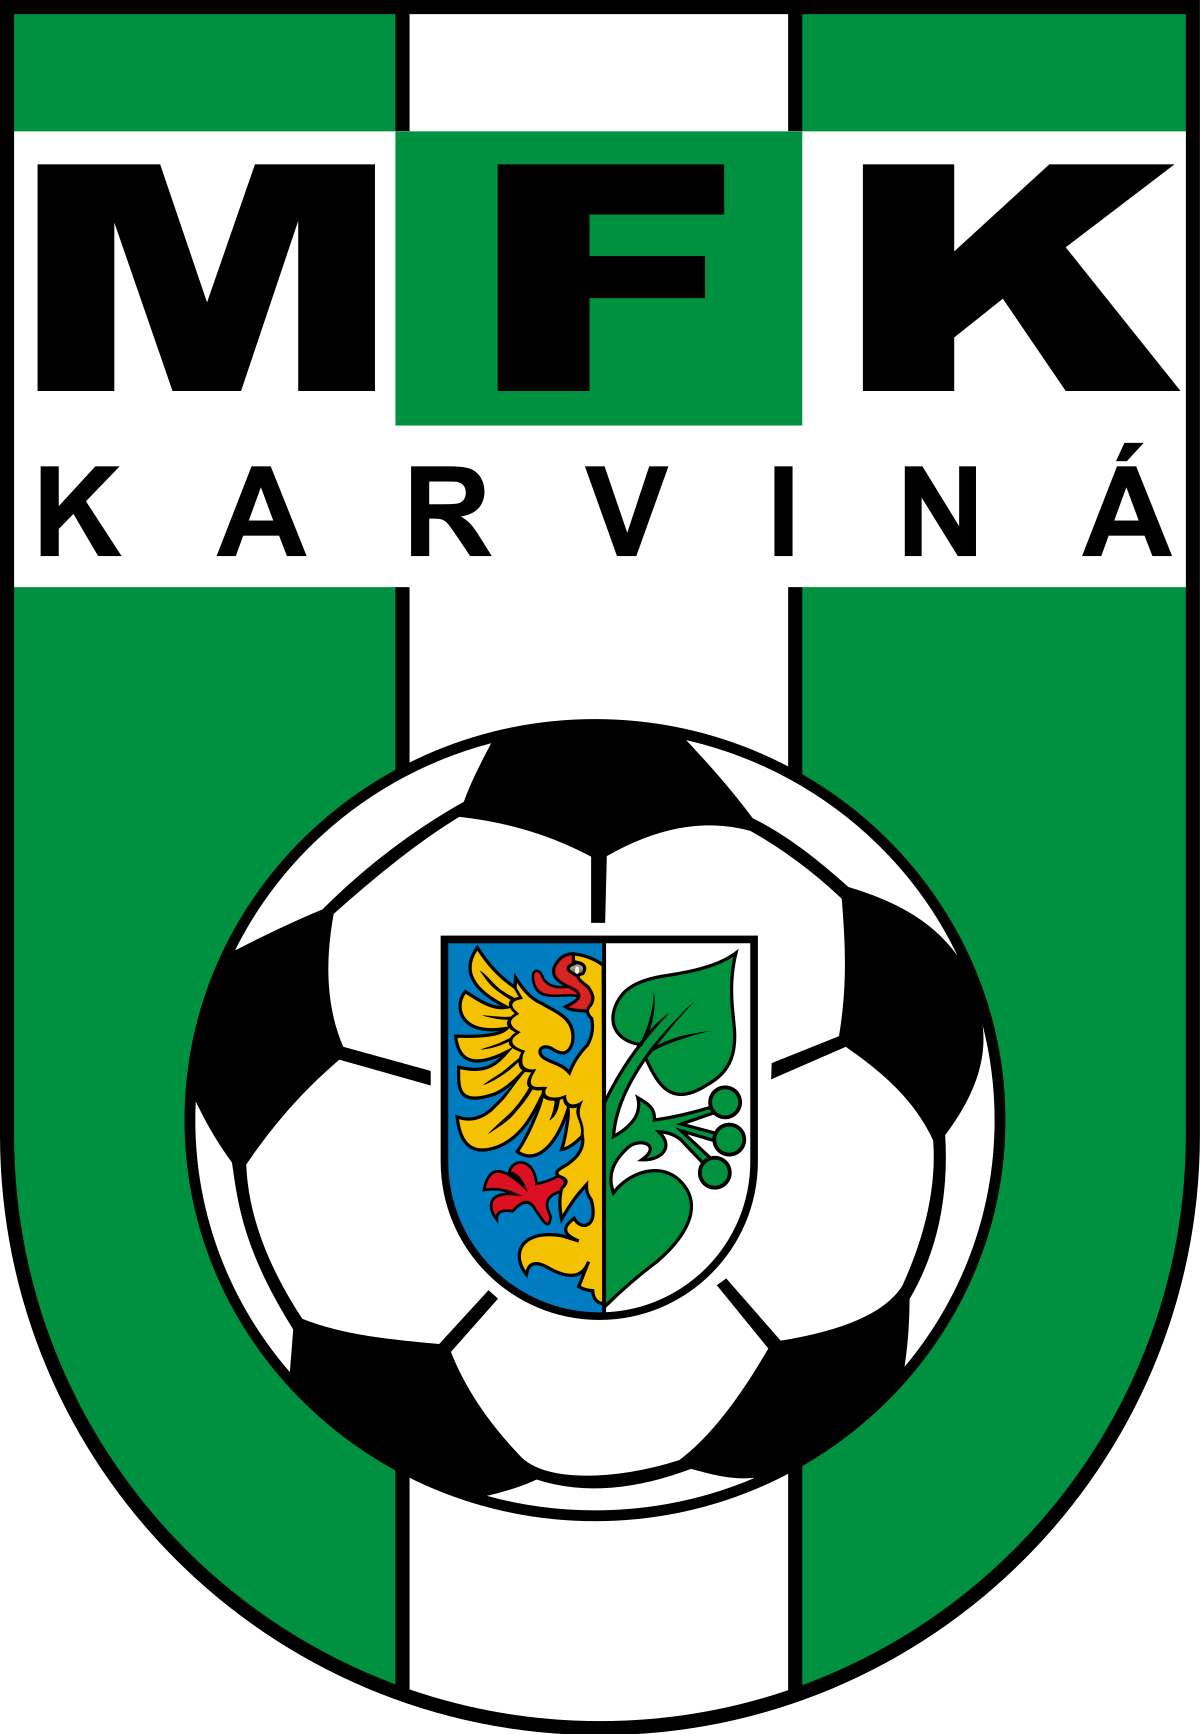 Karvina-2 logo